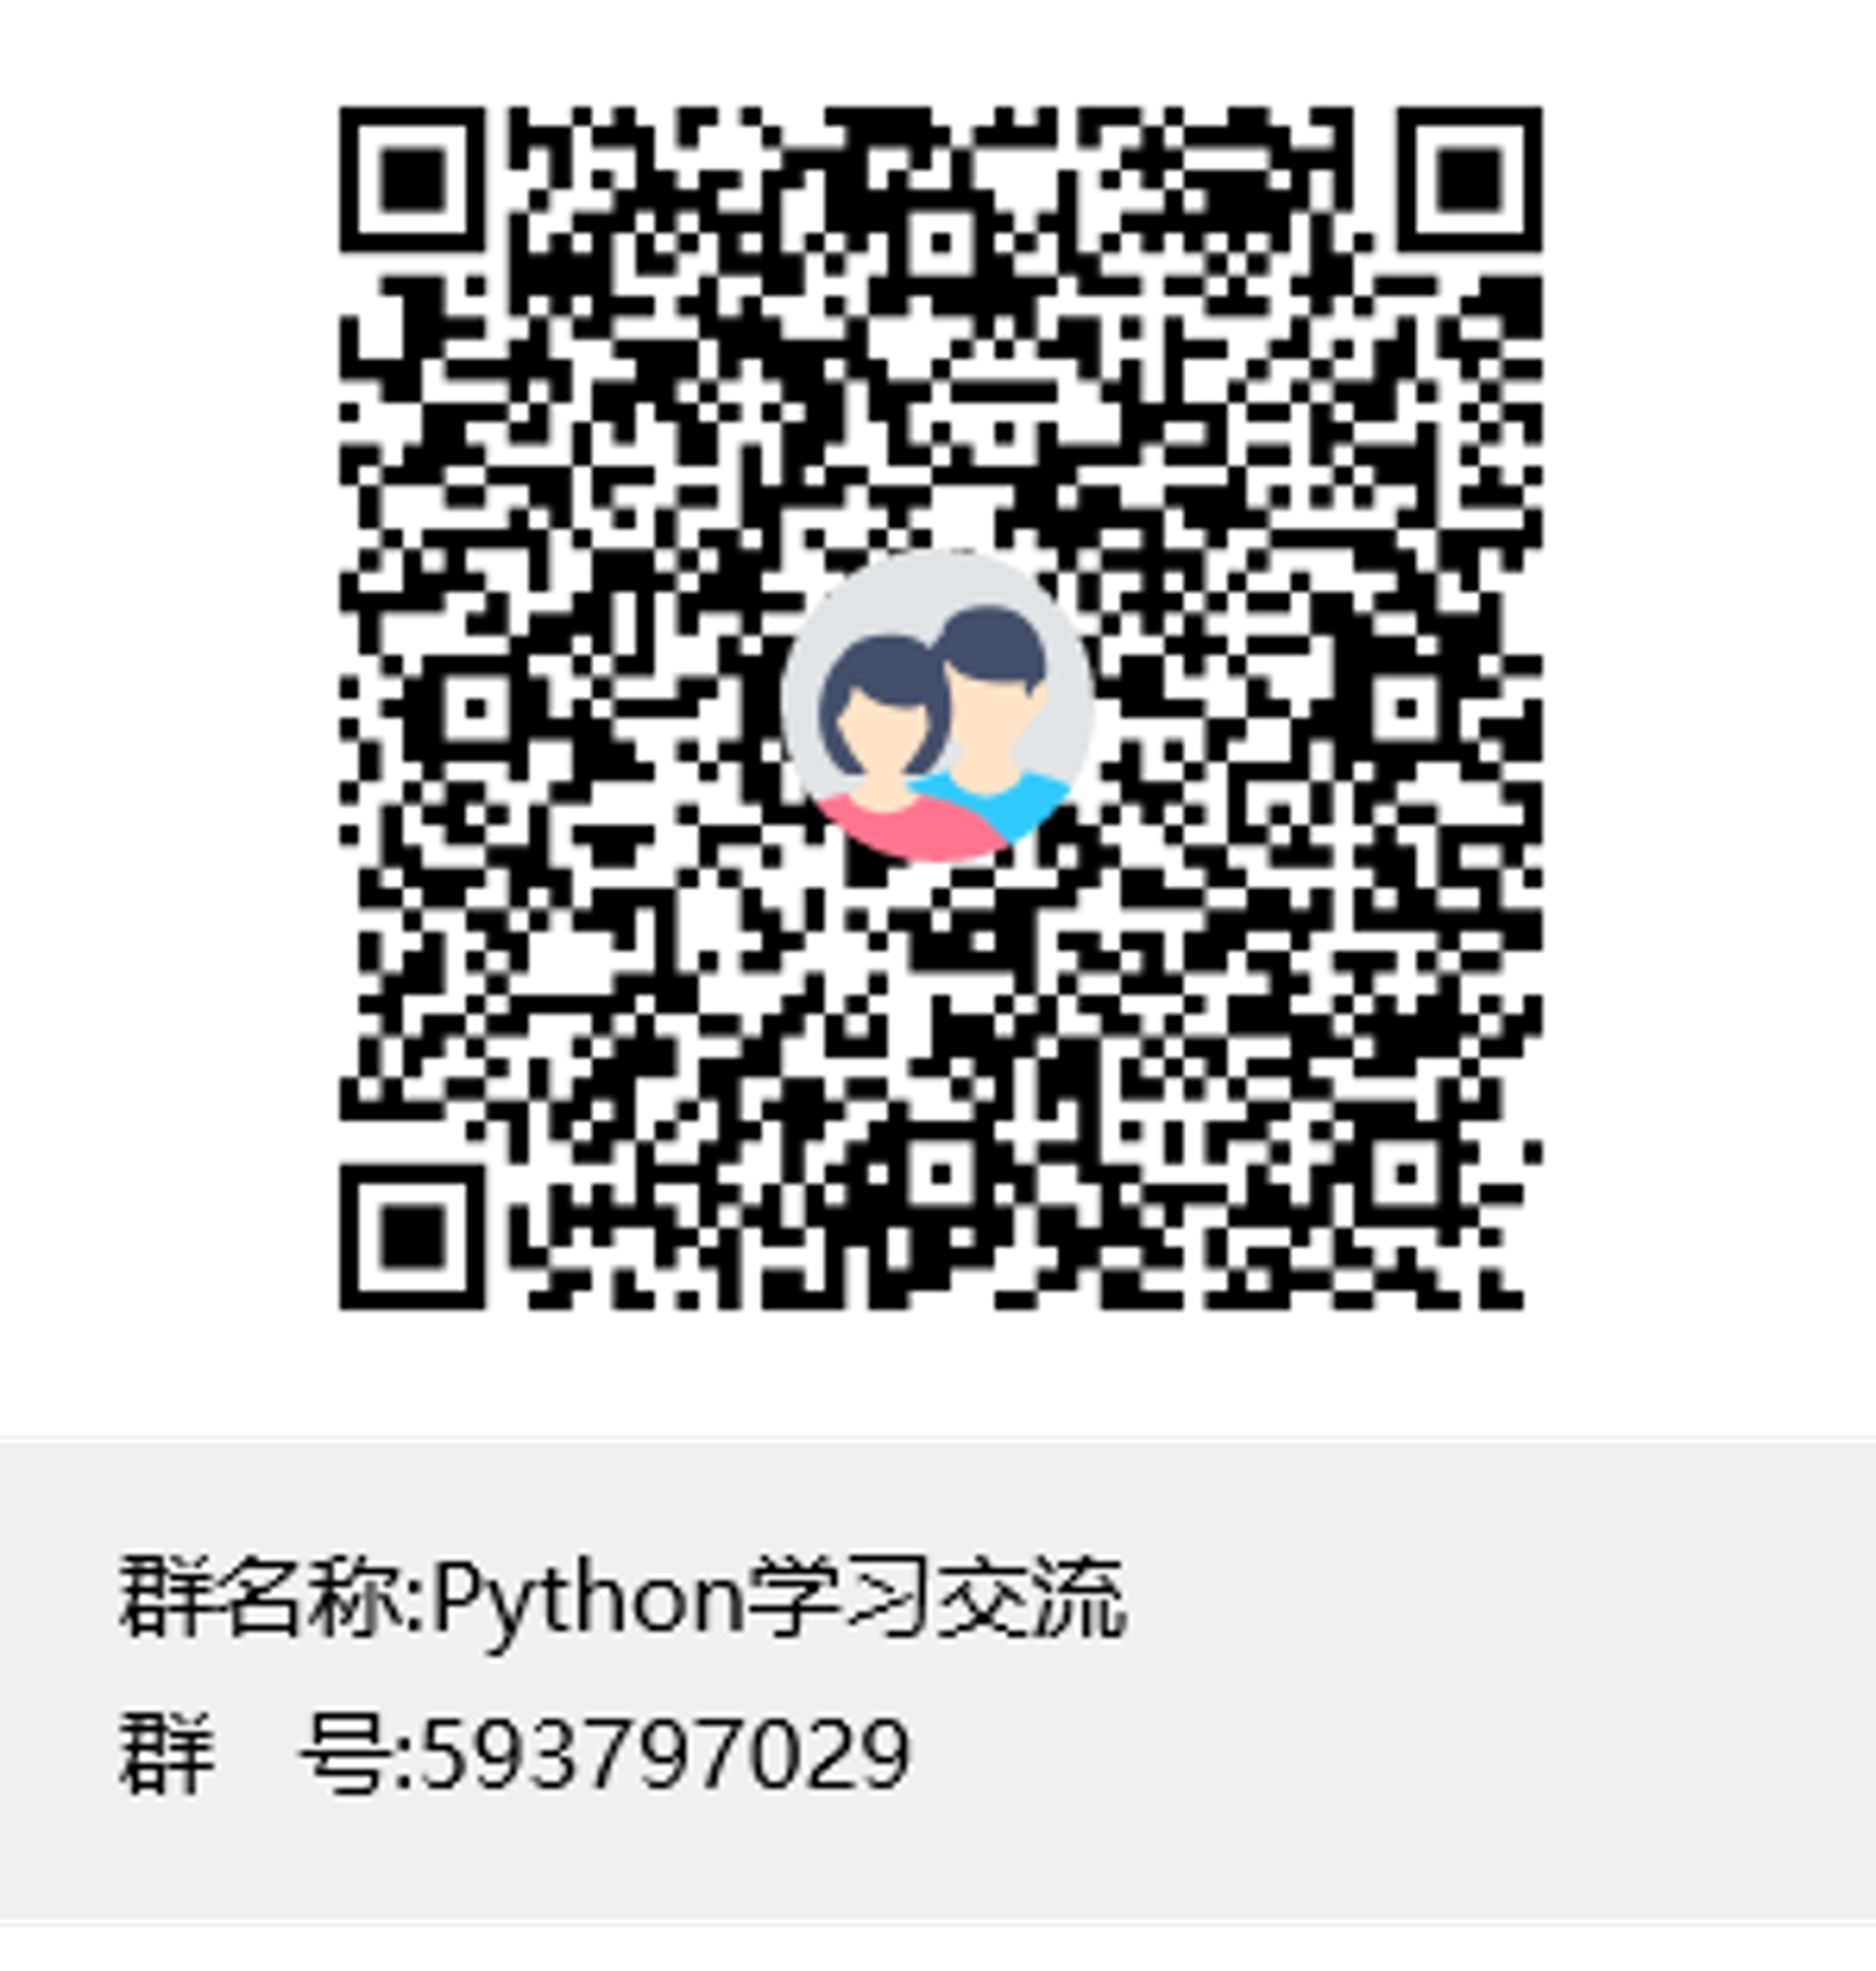 Python资料群